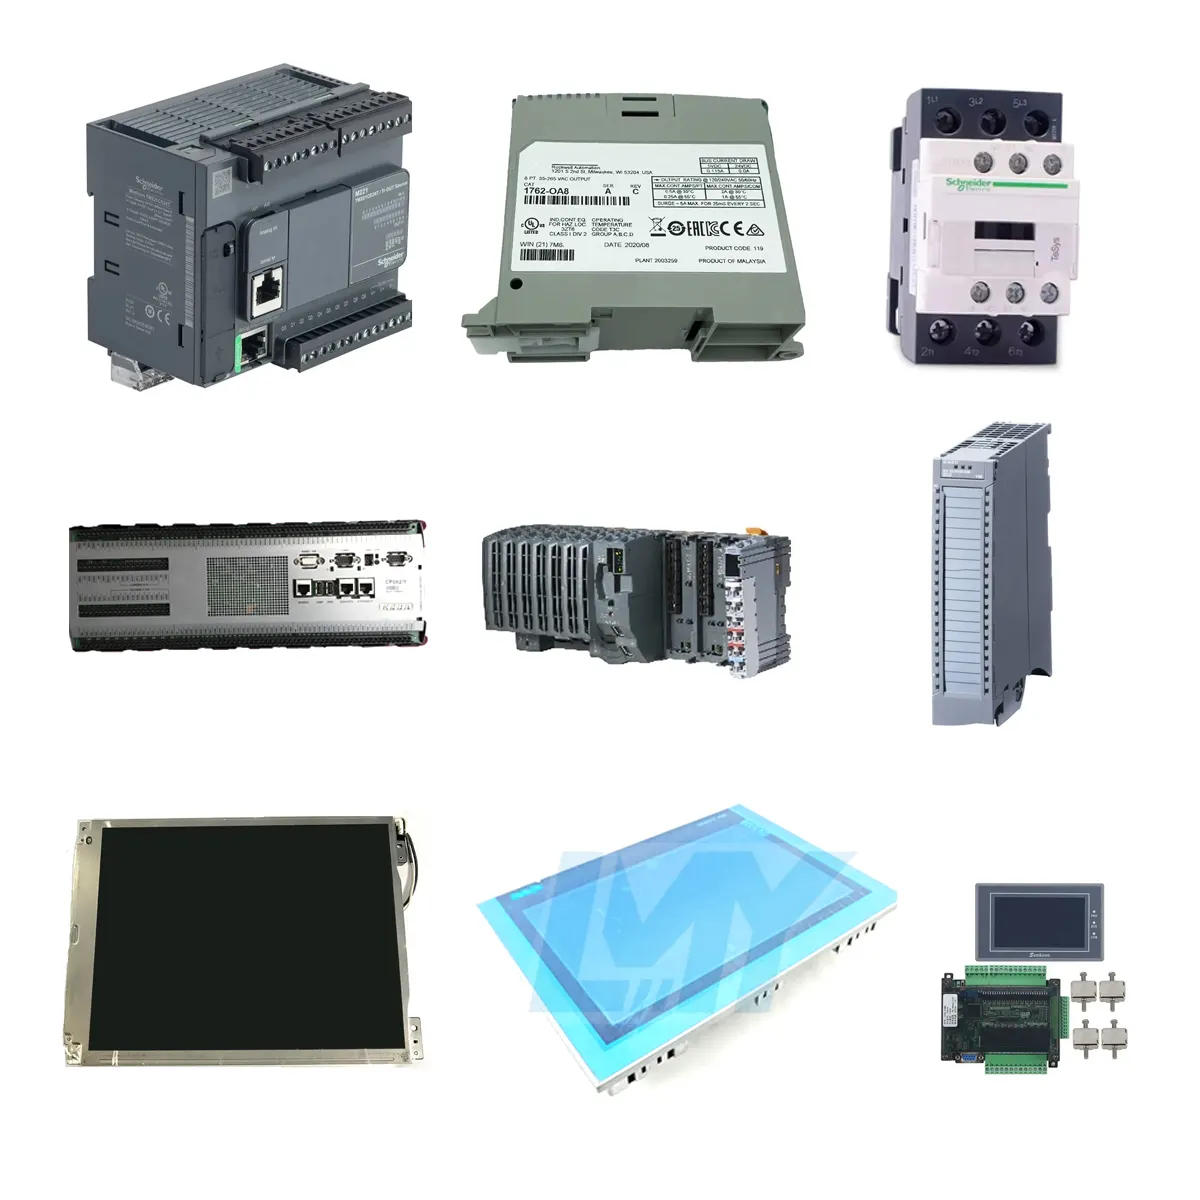 Wholesales Price for PLC Control Siemens Simatic S7 1200, Siemens S7 200 1510 CPU PLC Module Controller